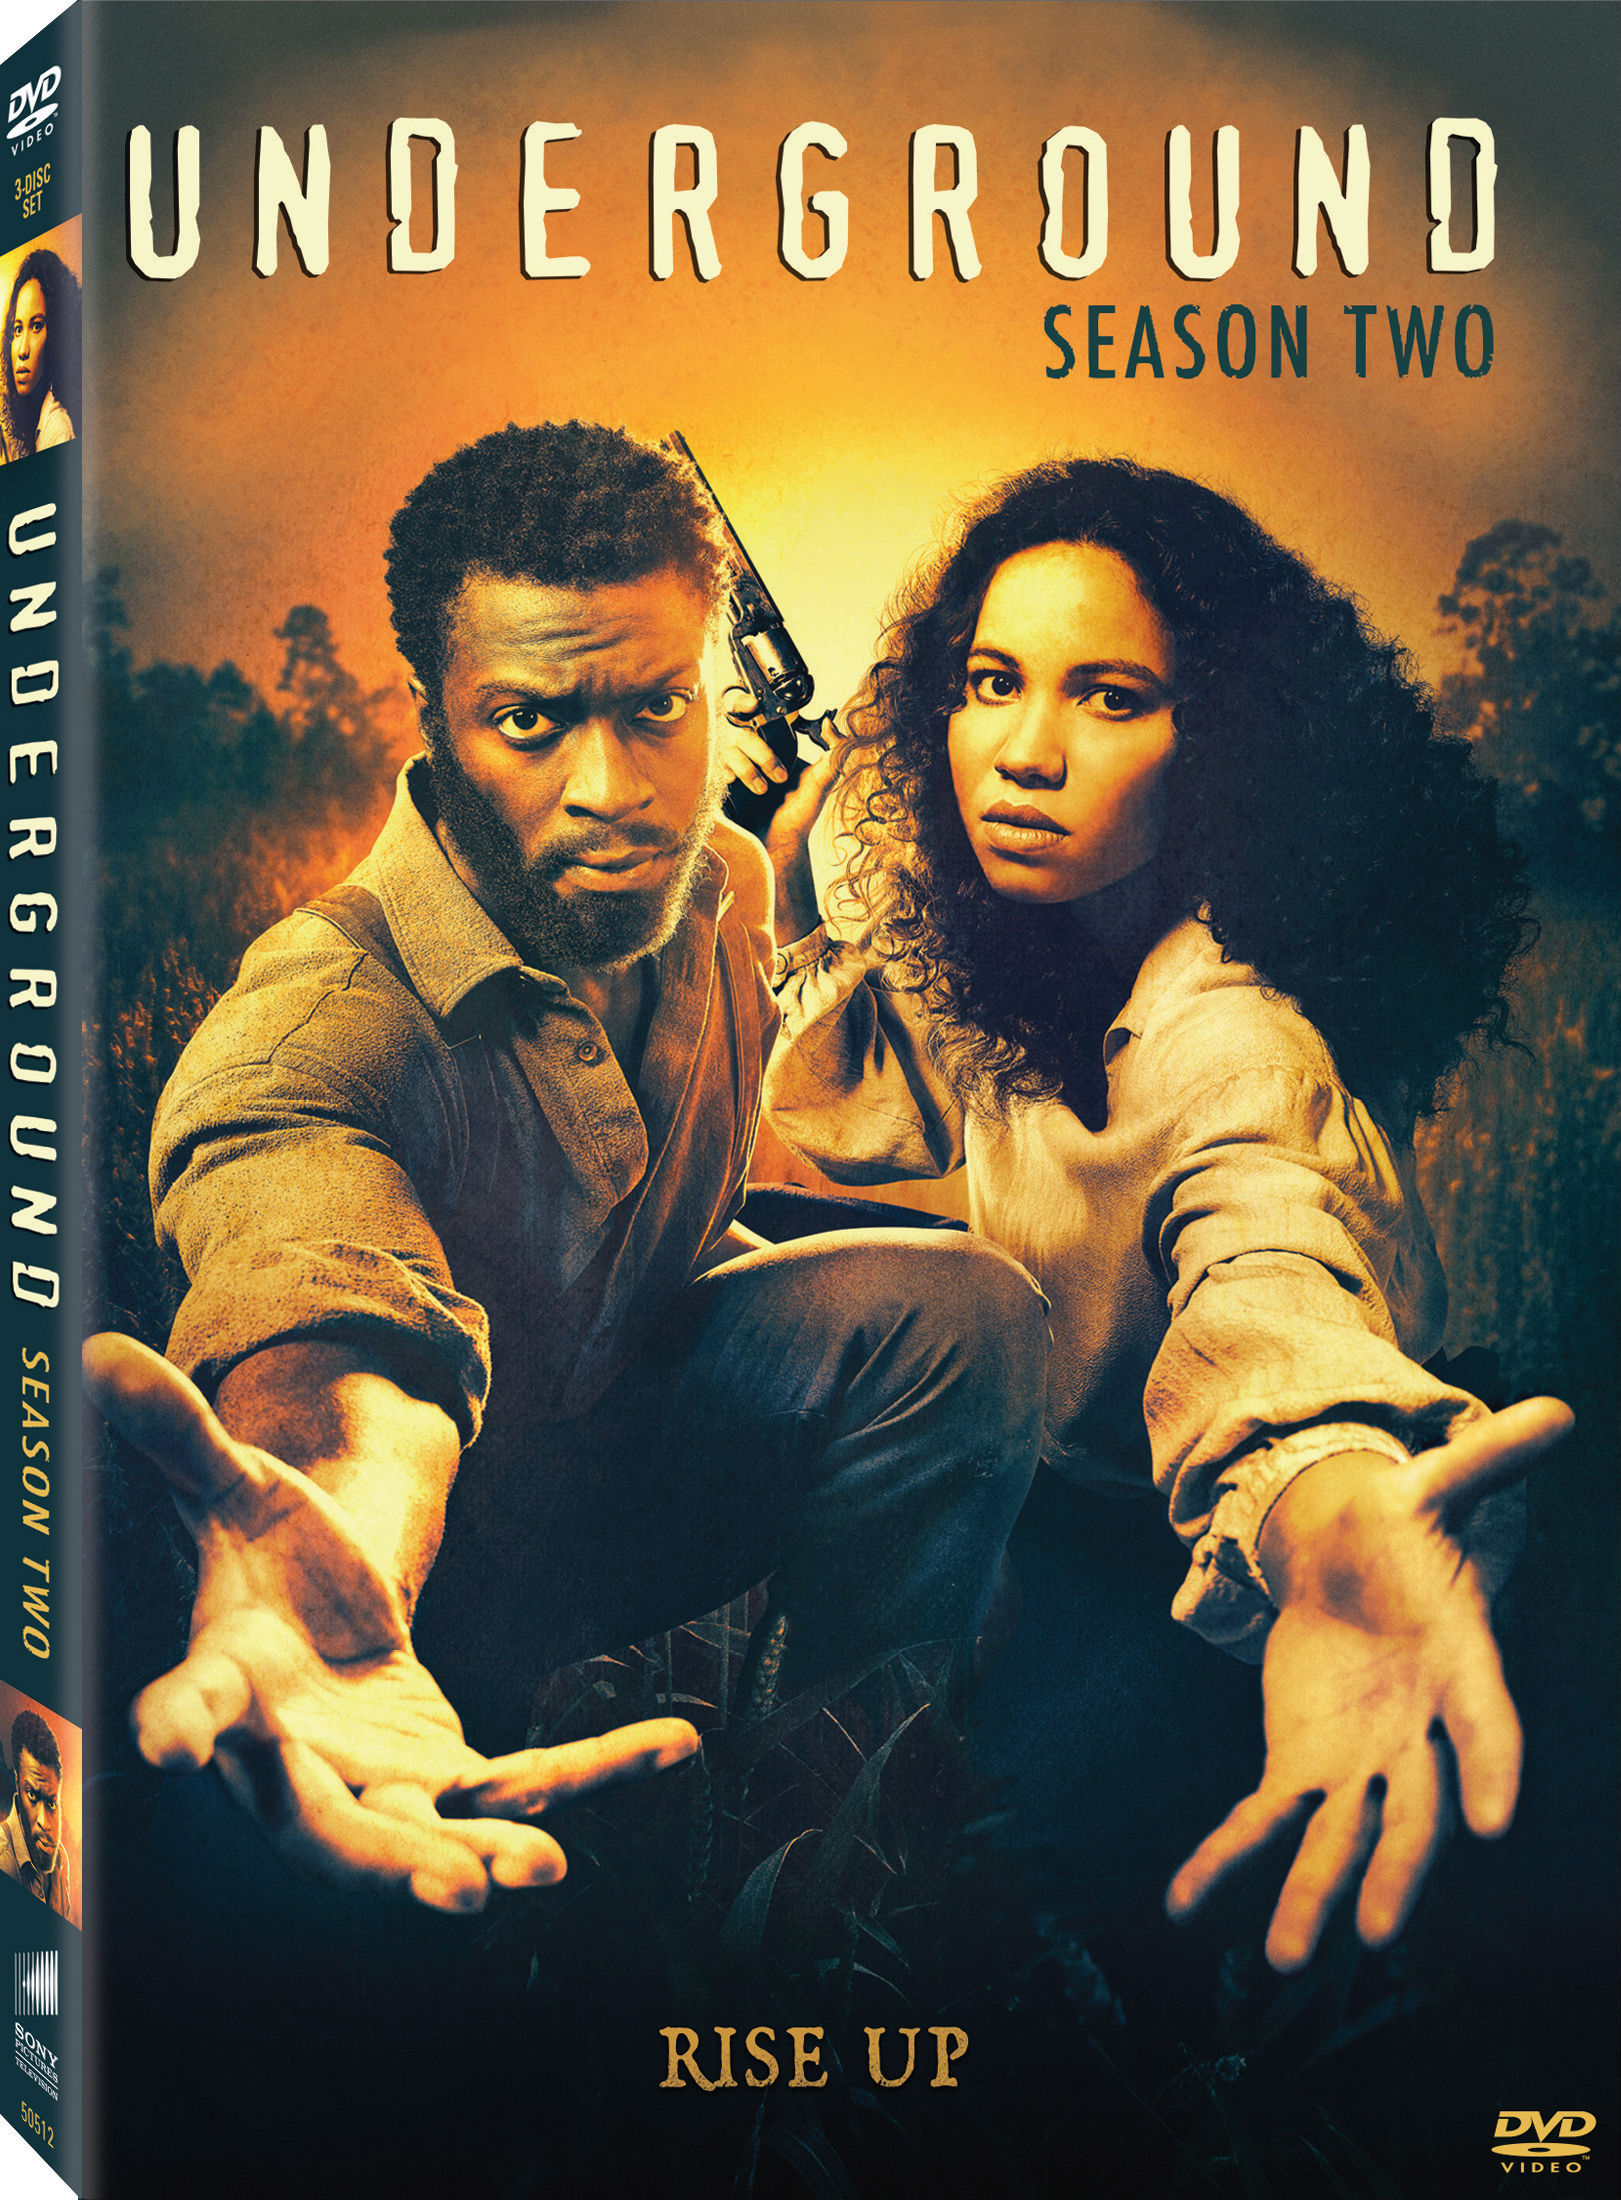 Underground: Season Two Hits DVD On July 11 - blackfilm.com/read ...